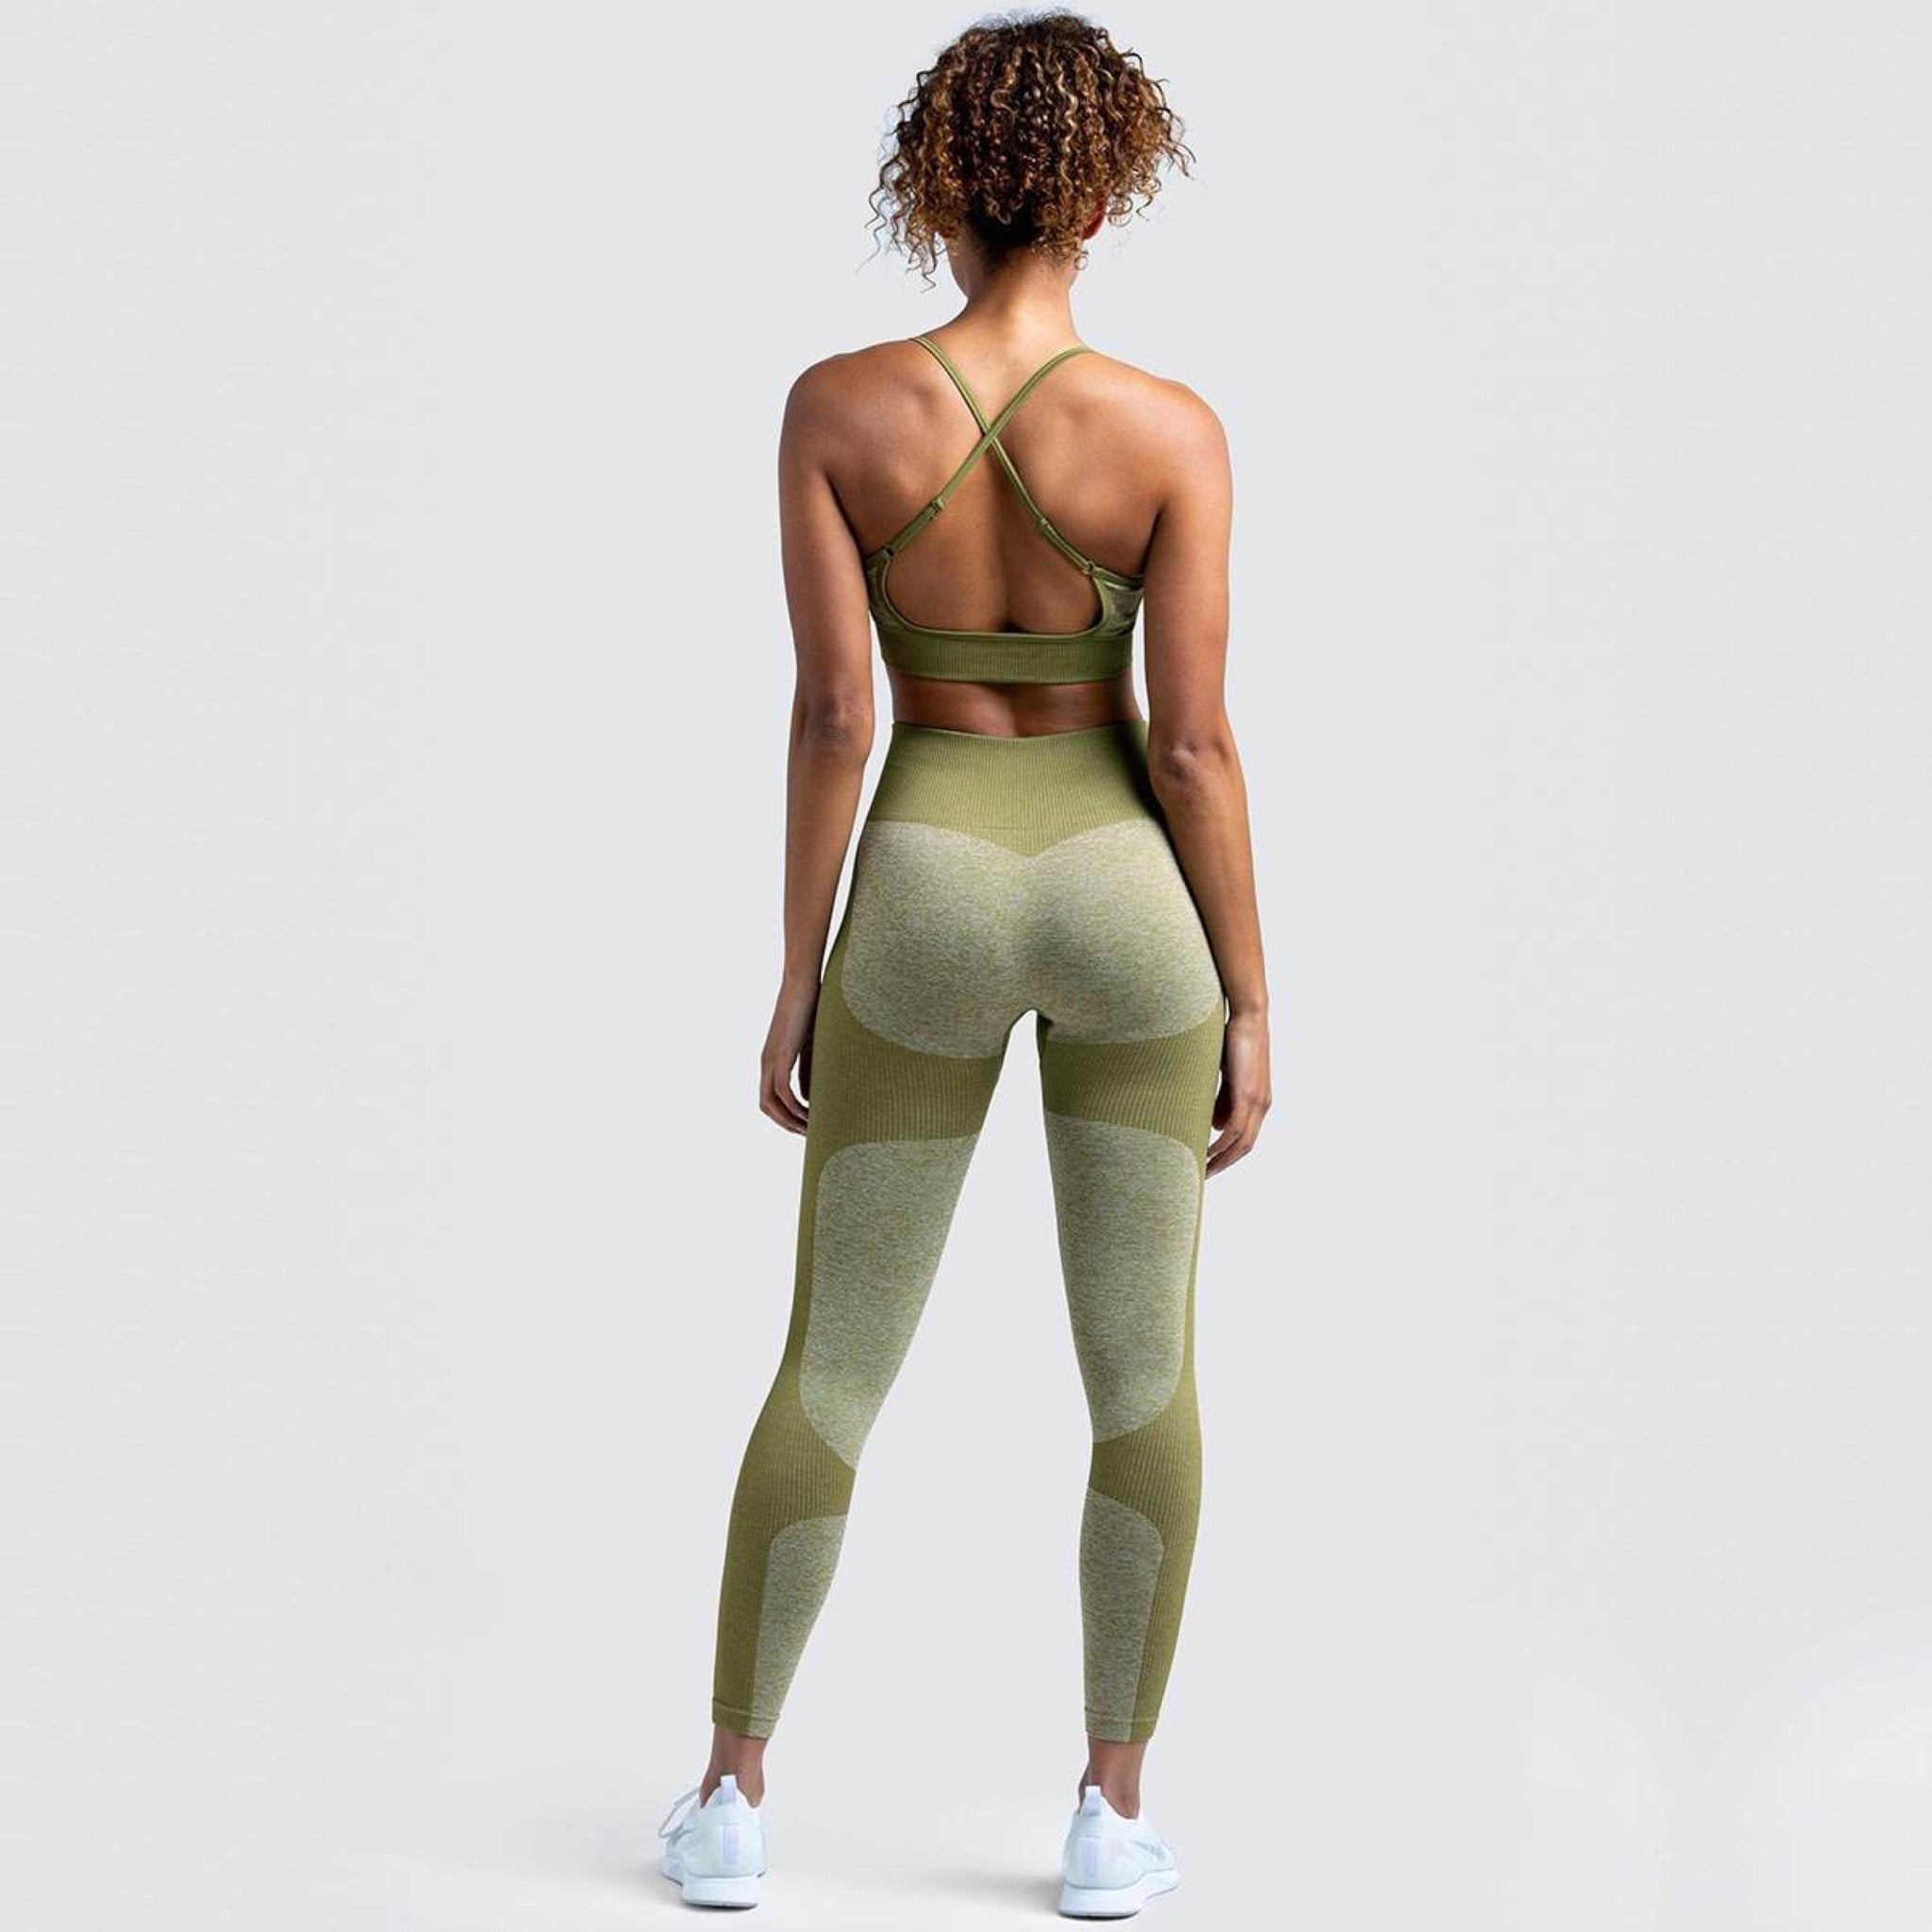 Yoga Gym Activewear Tights & Bra Set - Black Olive Tree